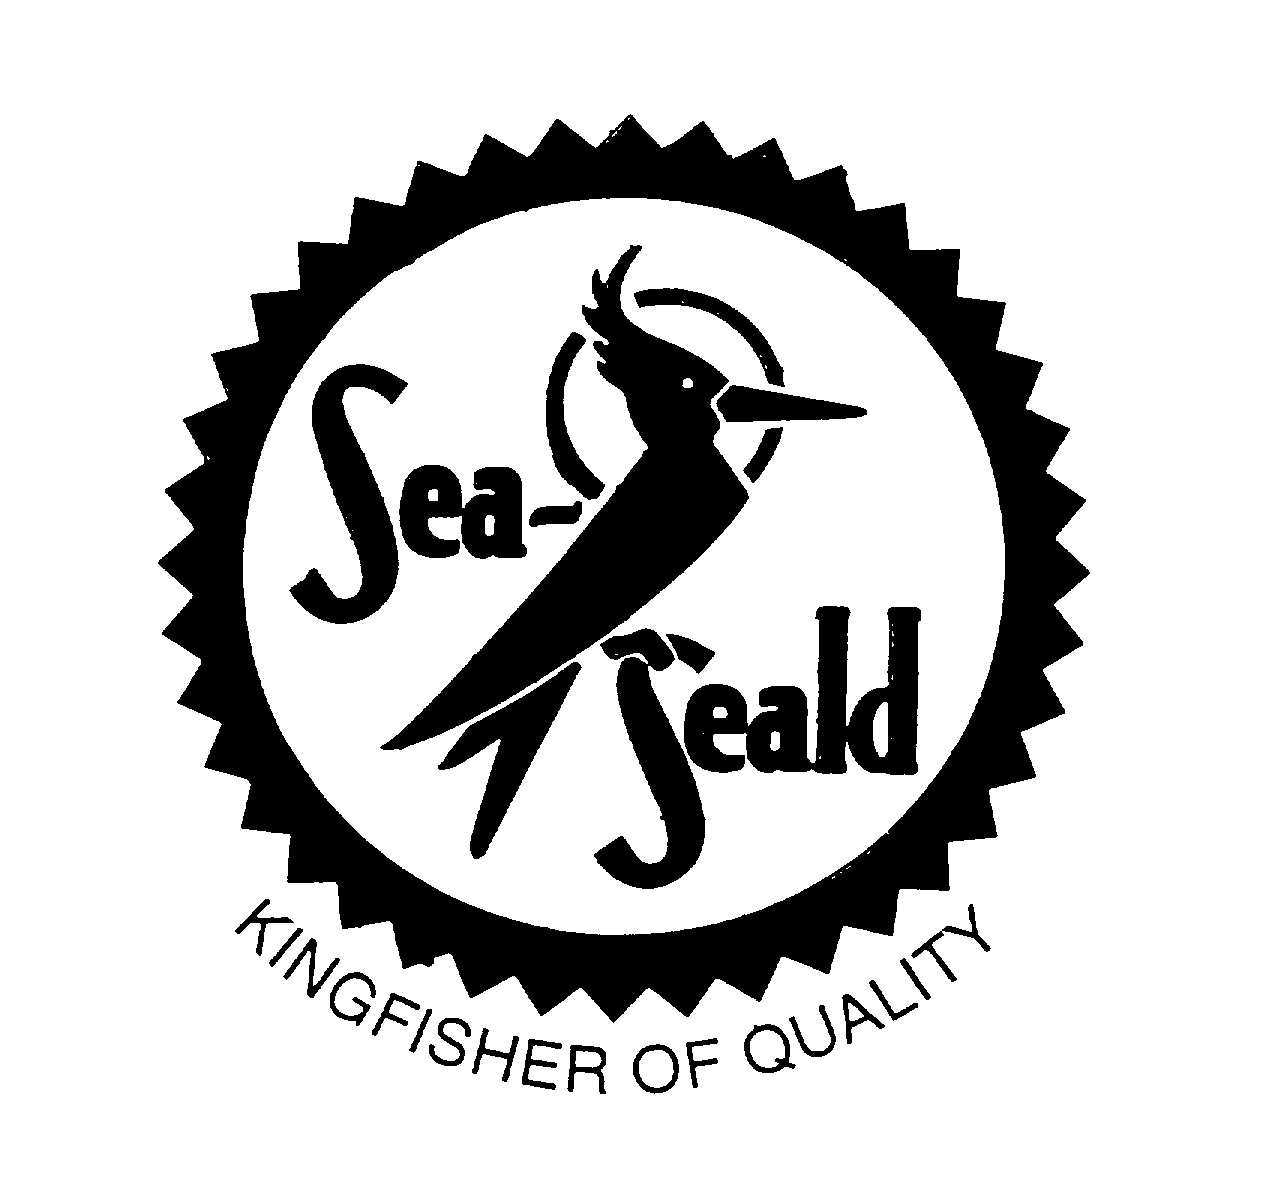  SEA-SEALD KINGFISHER OF QUALITY